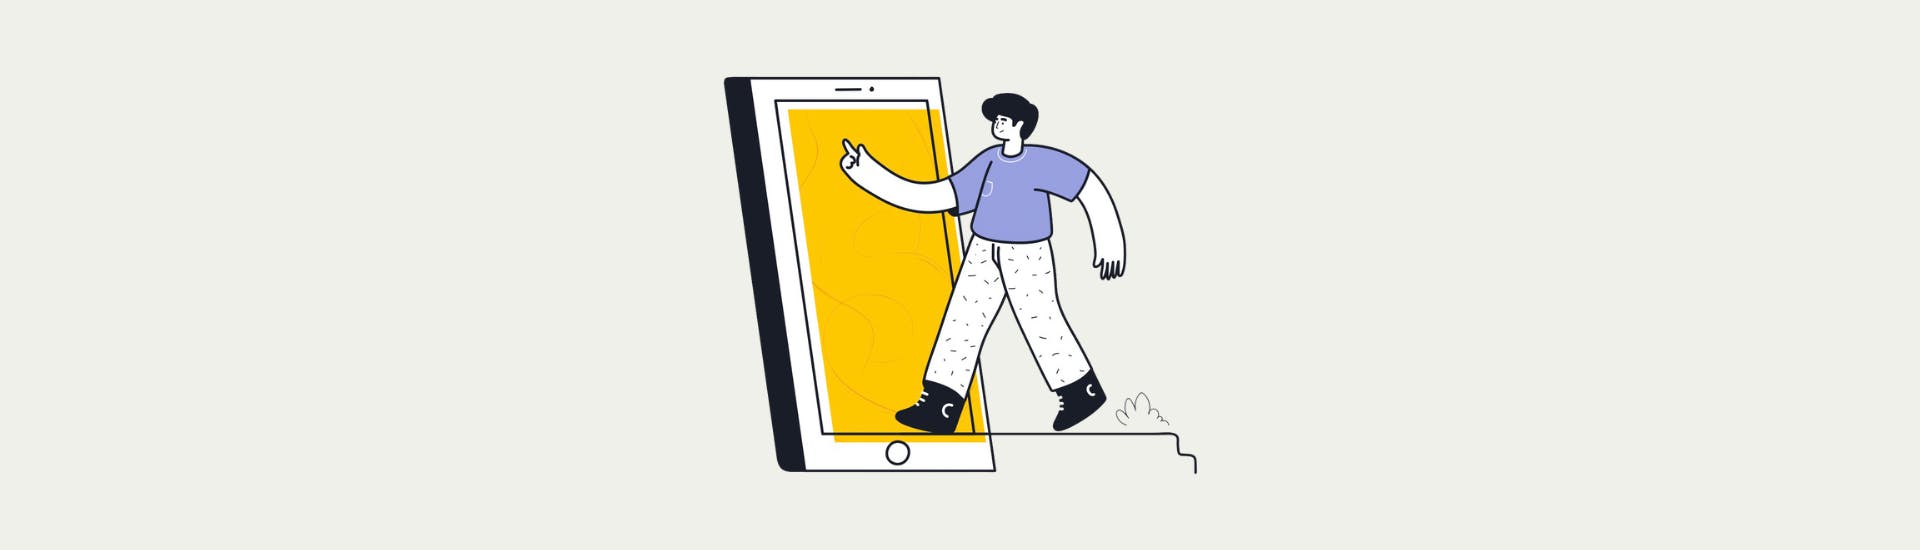 Illustration. Man walks into a smartphone screen via a staircase.